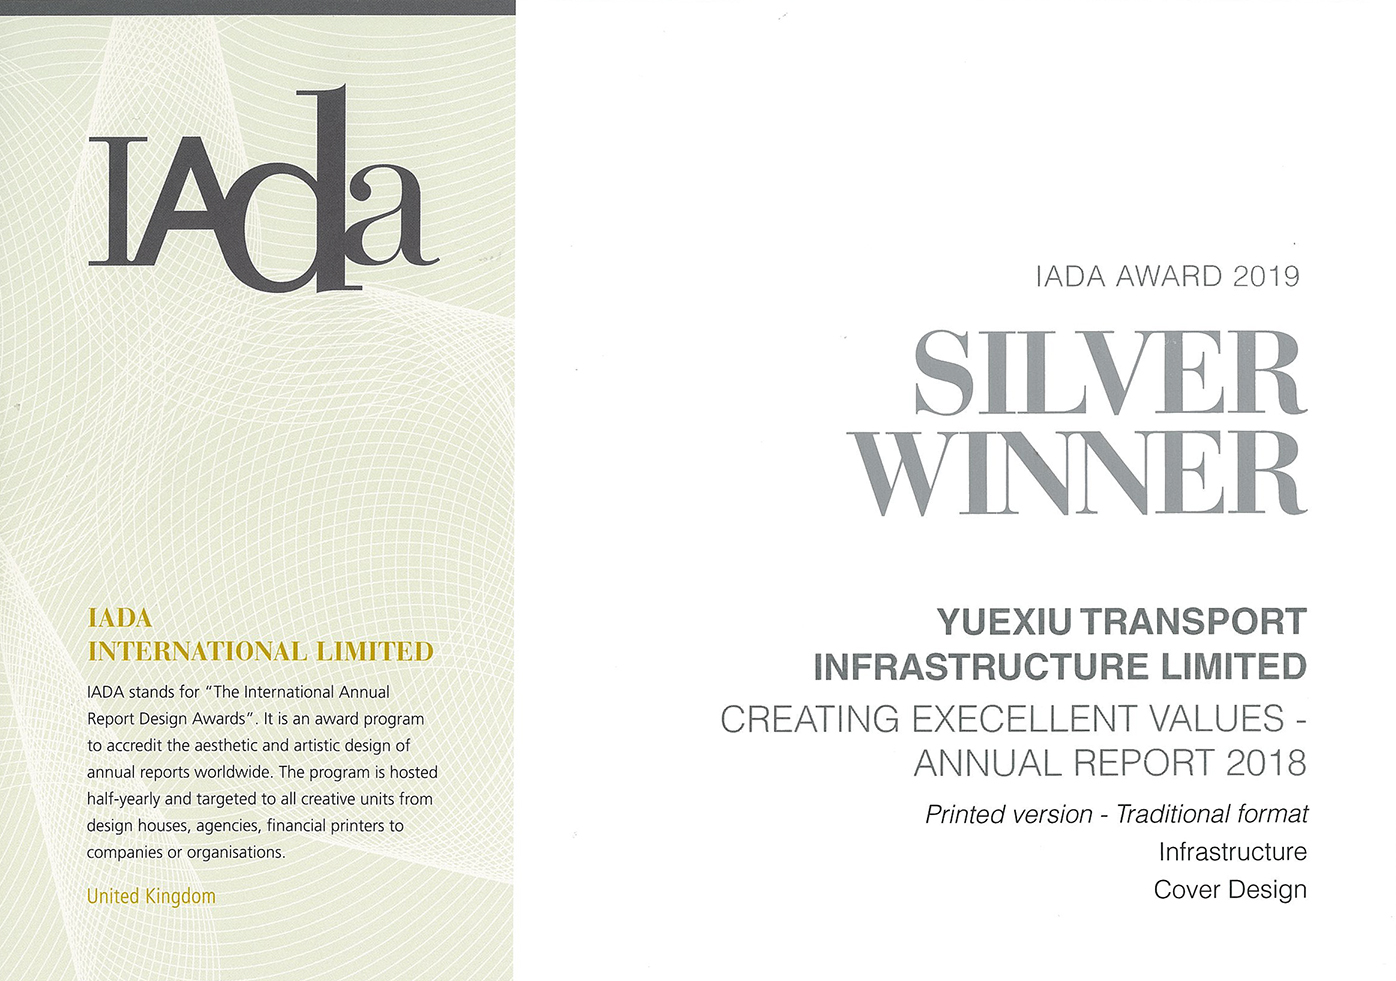 YUEXIU TRANSPORT INFRASTRUCTURE LIMITED – IADA AWARD 2019 SILVER WINNER